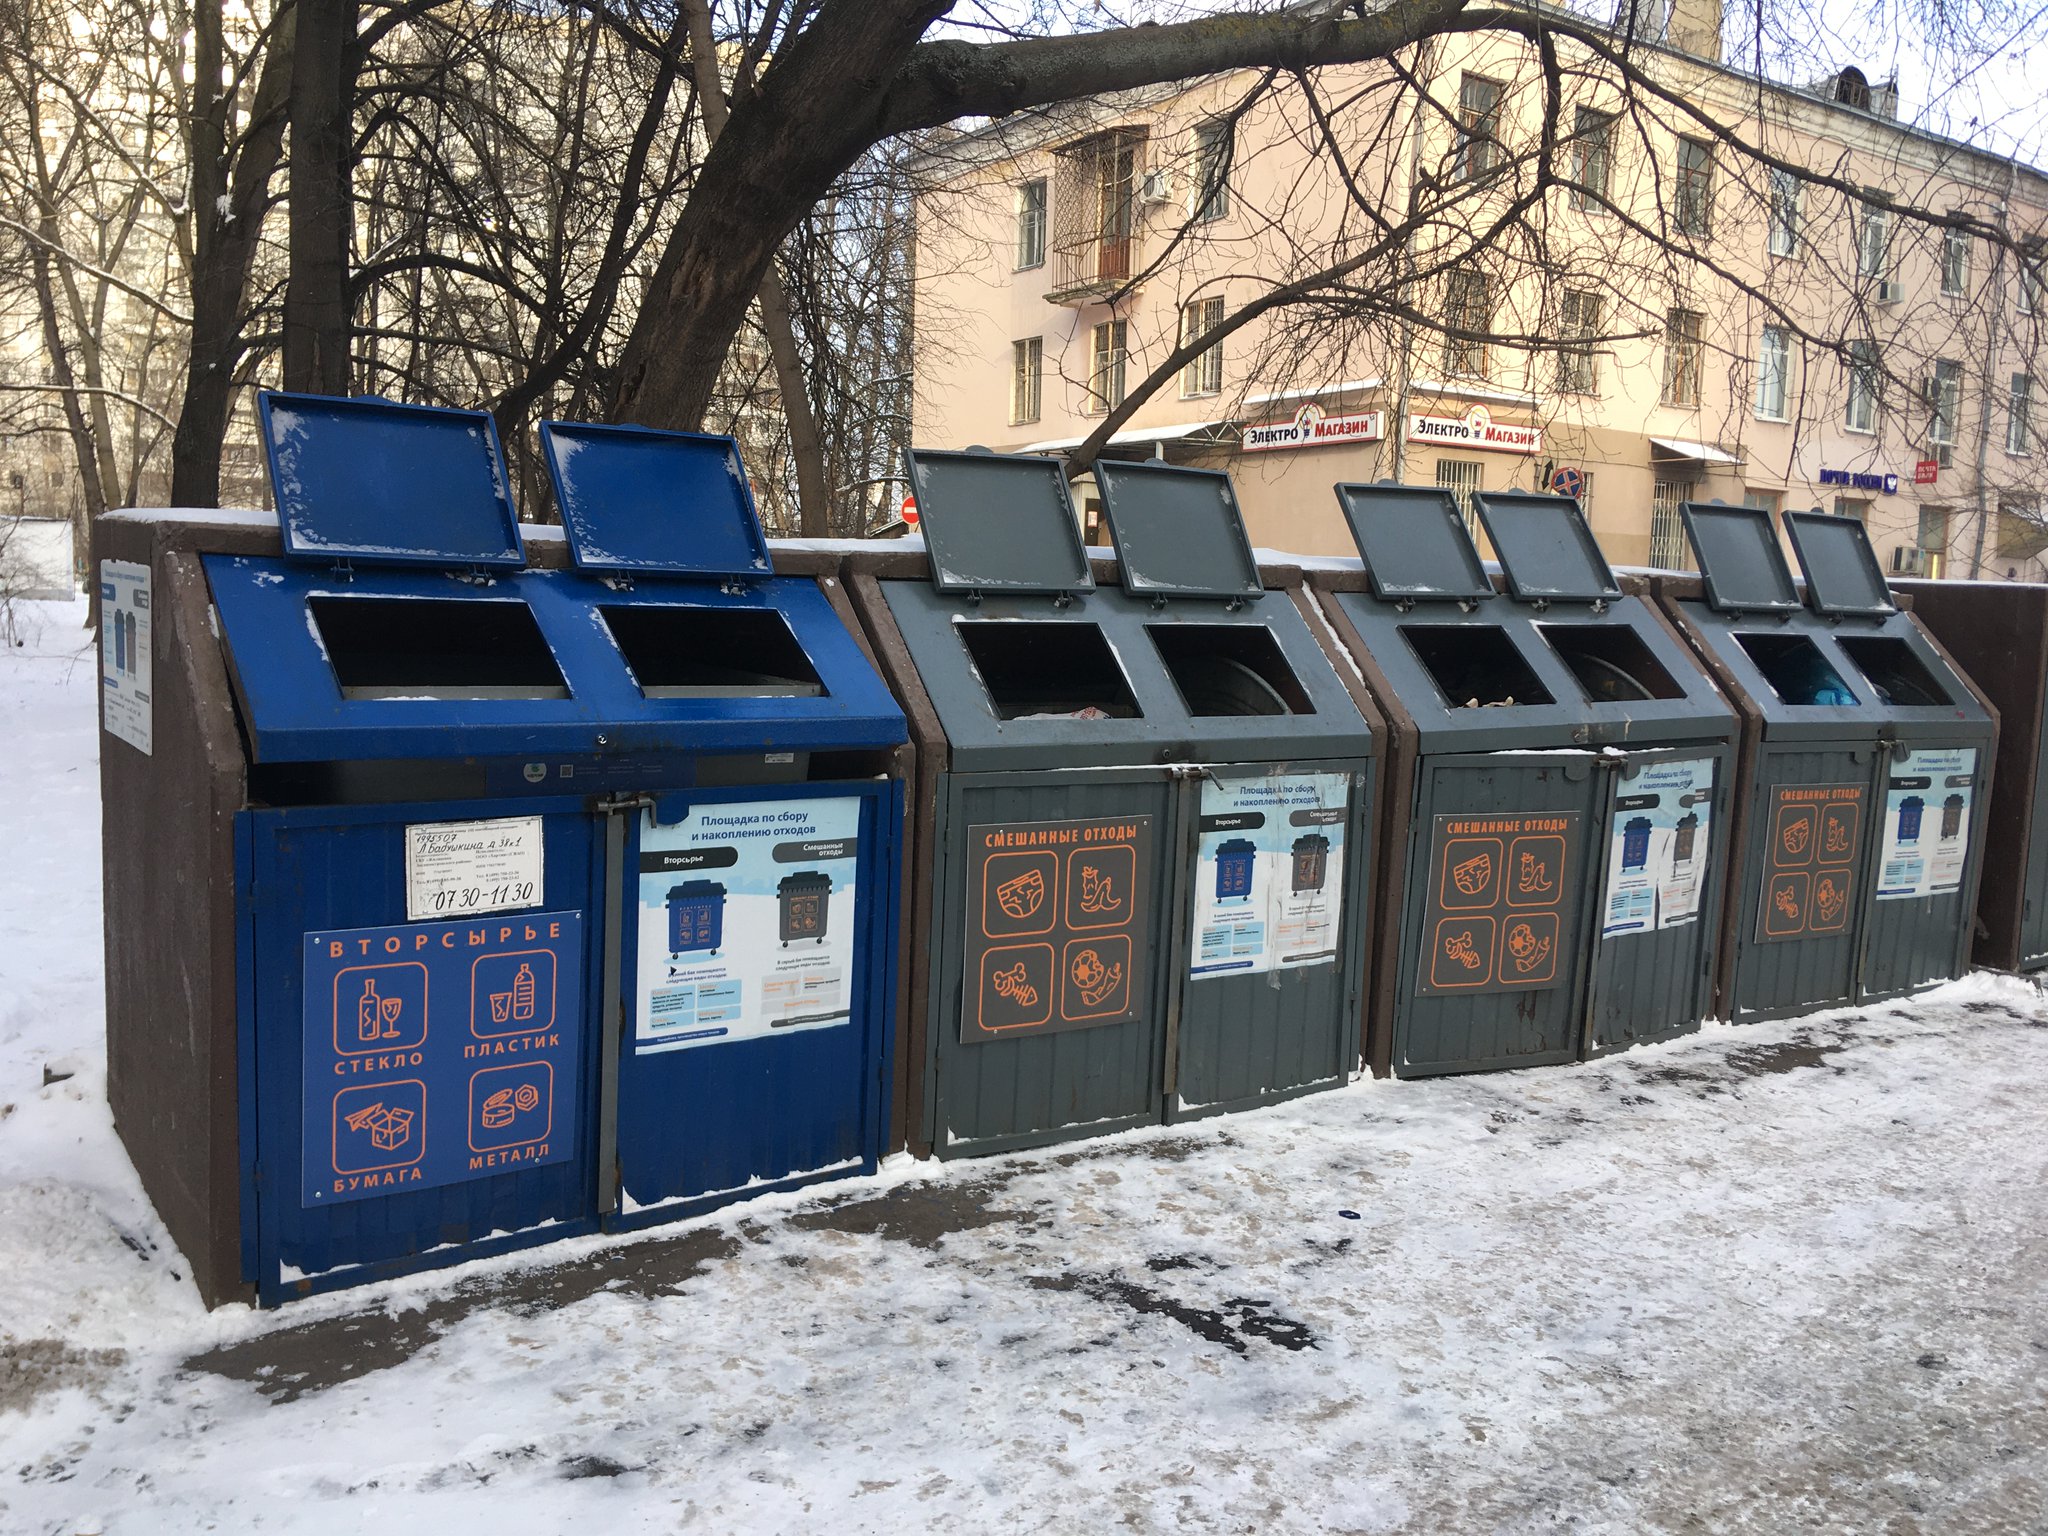 Москва и мусор